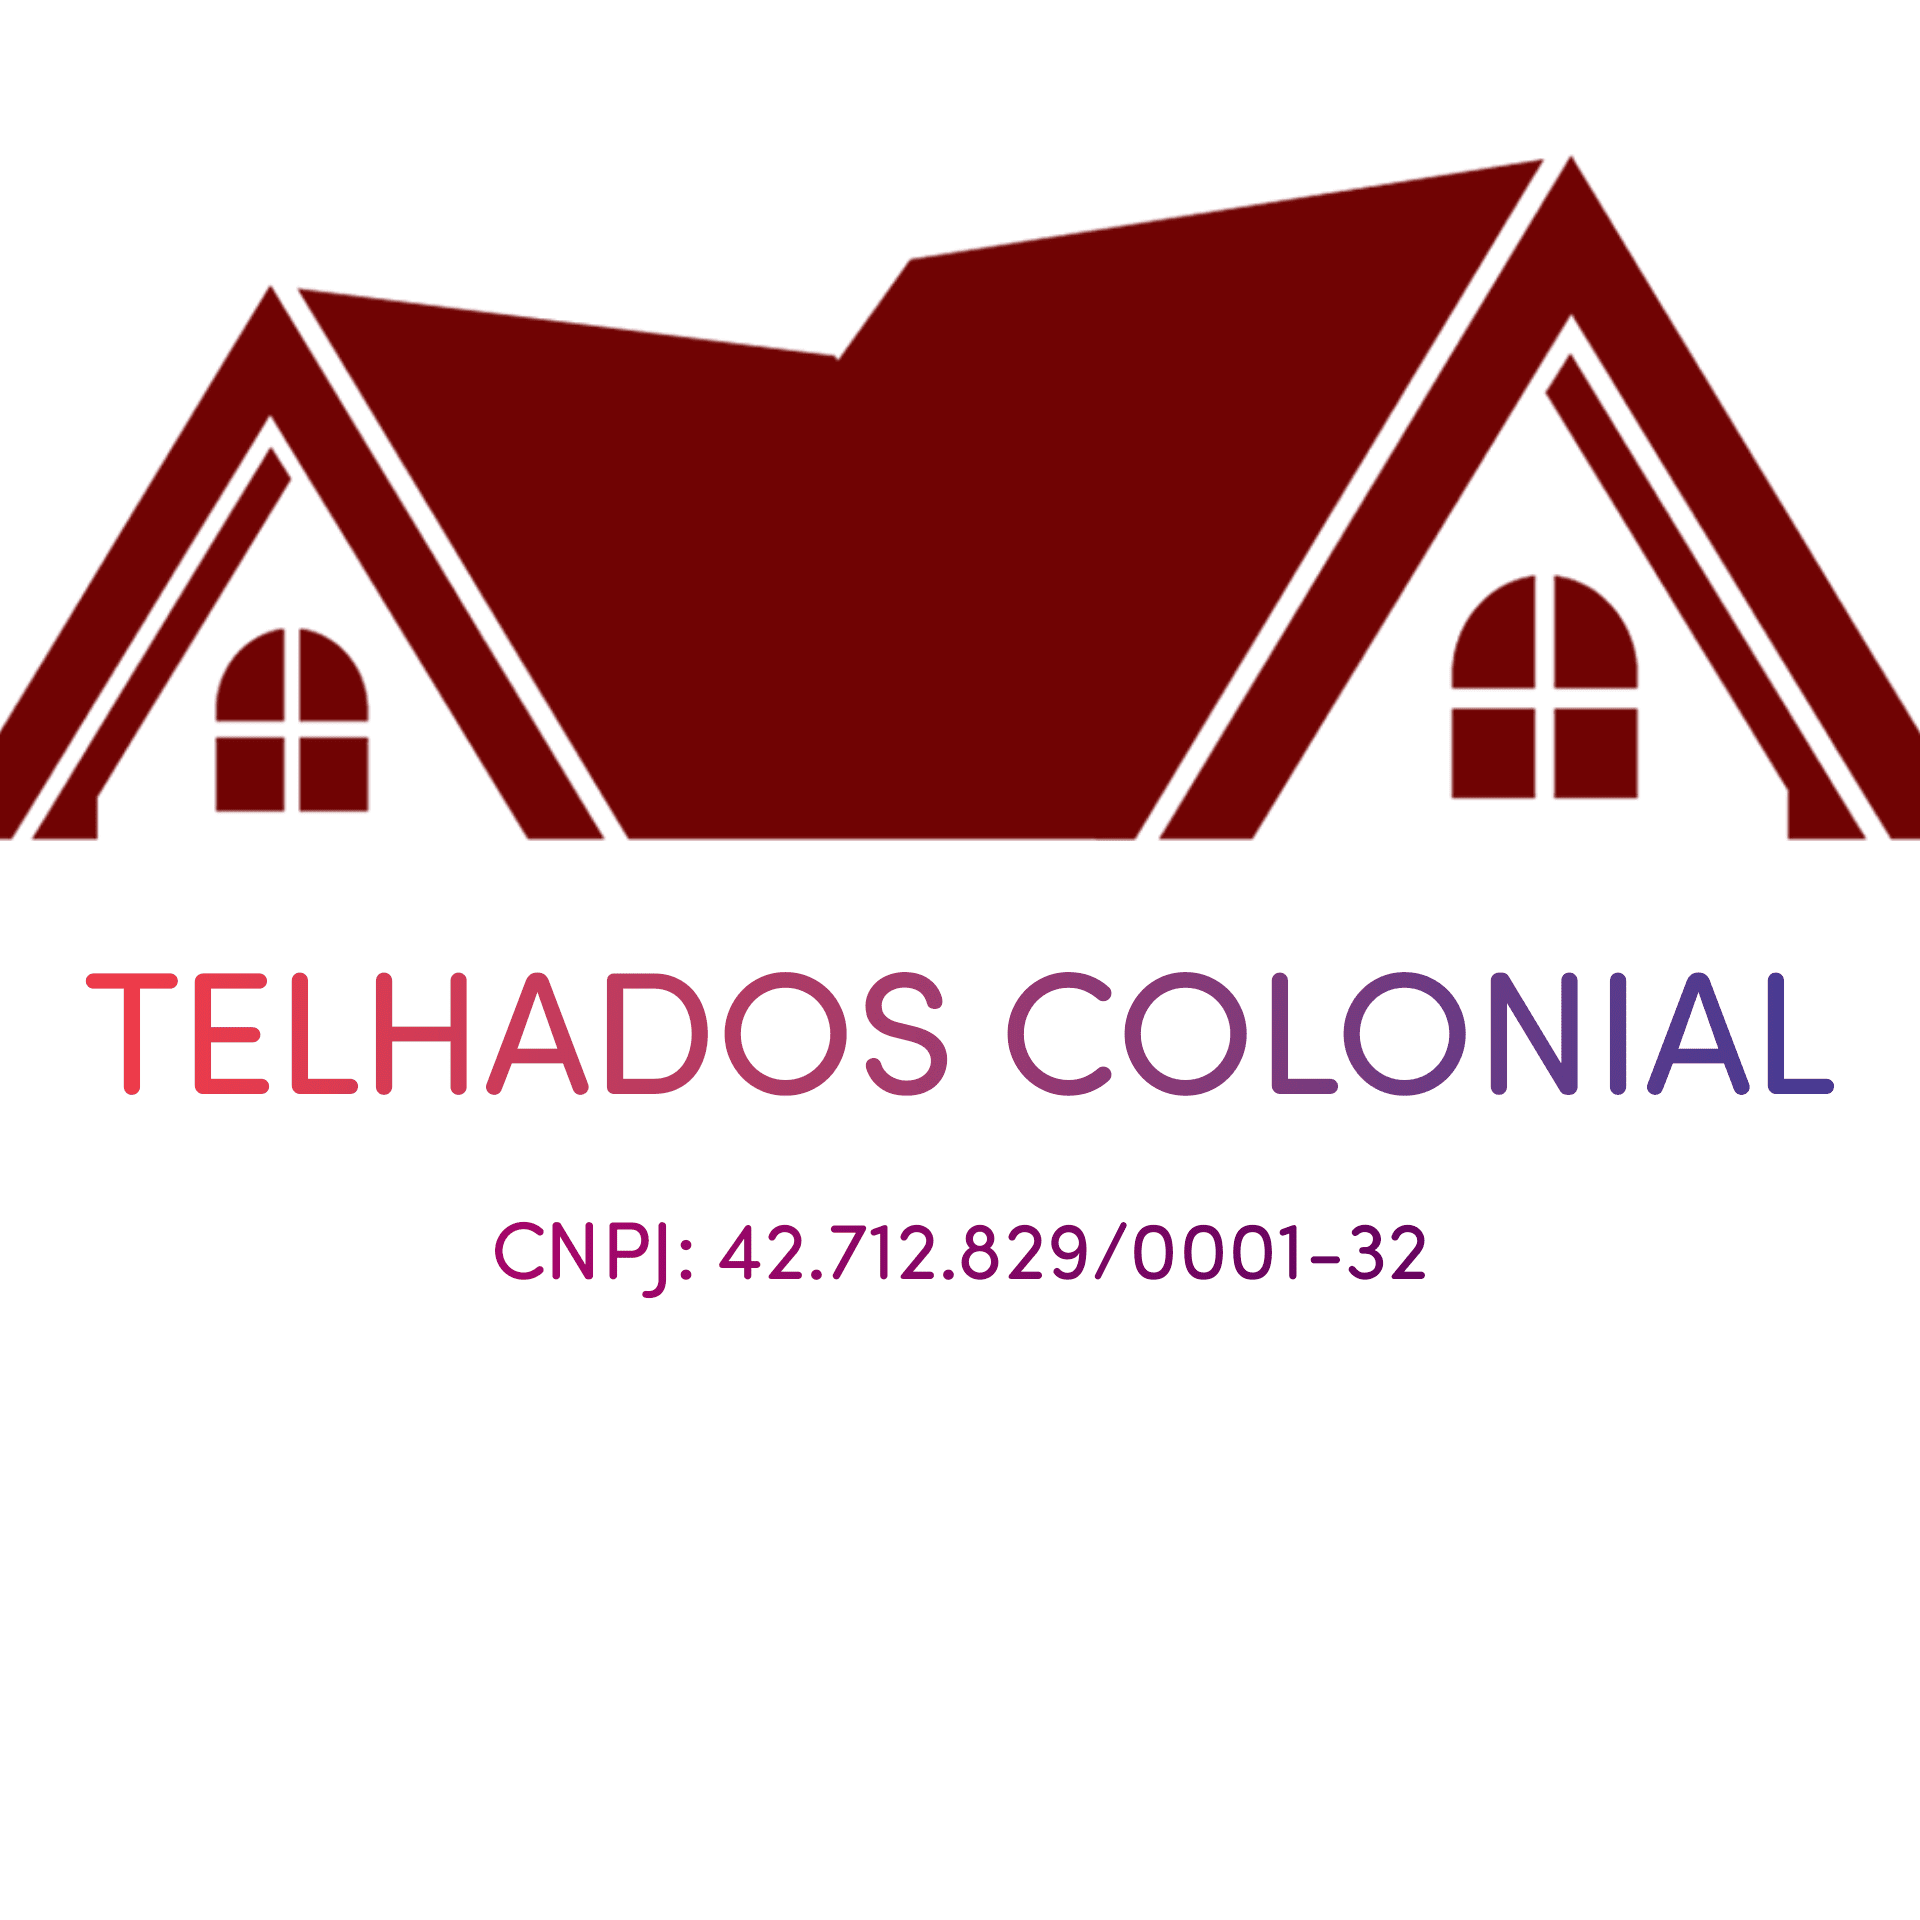 Telhados Colonial